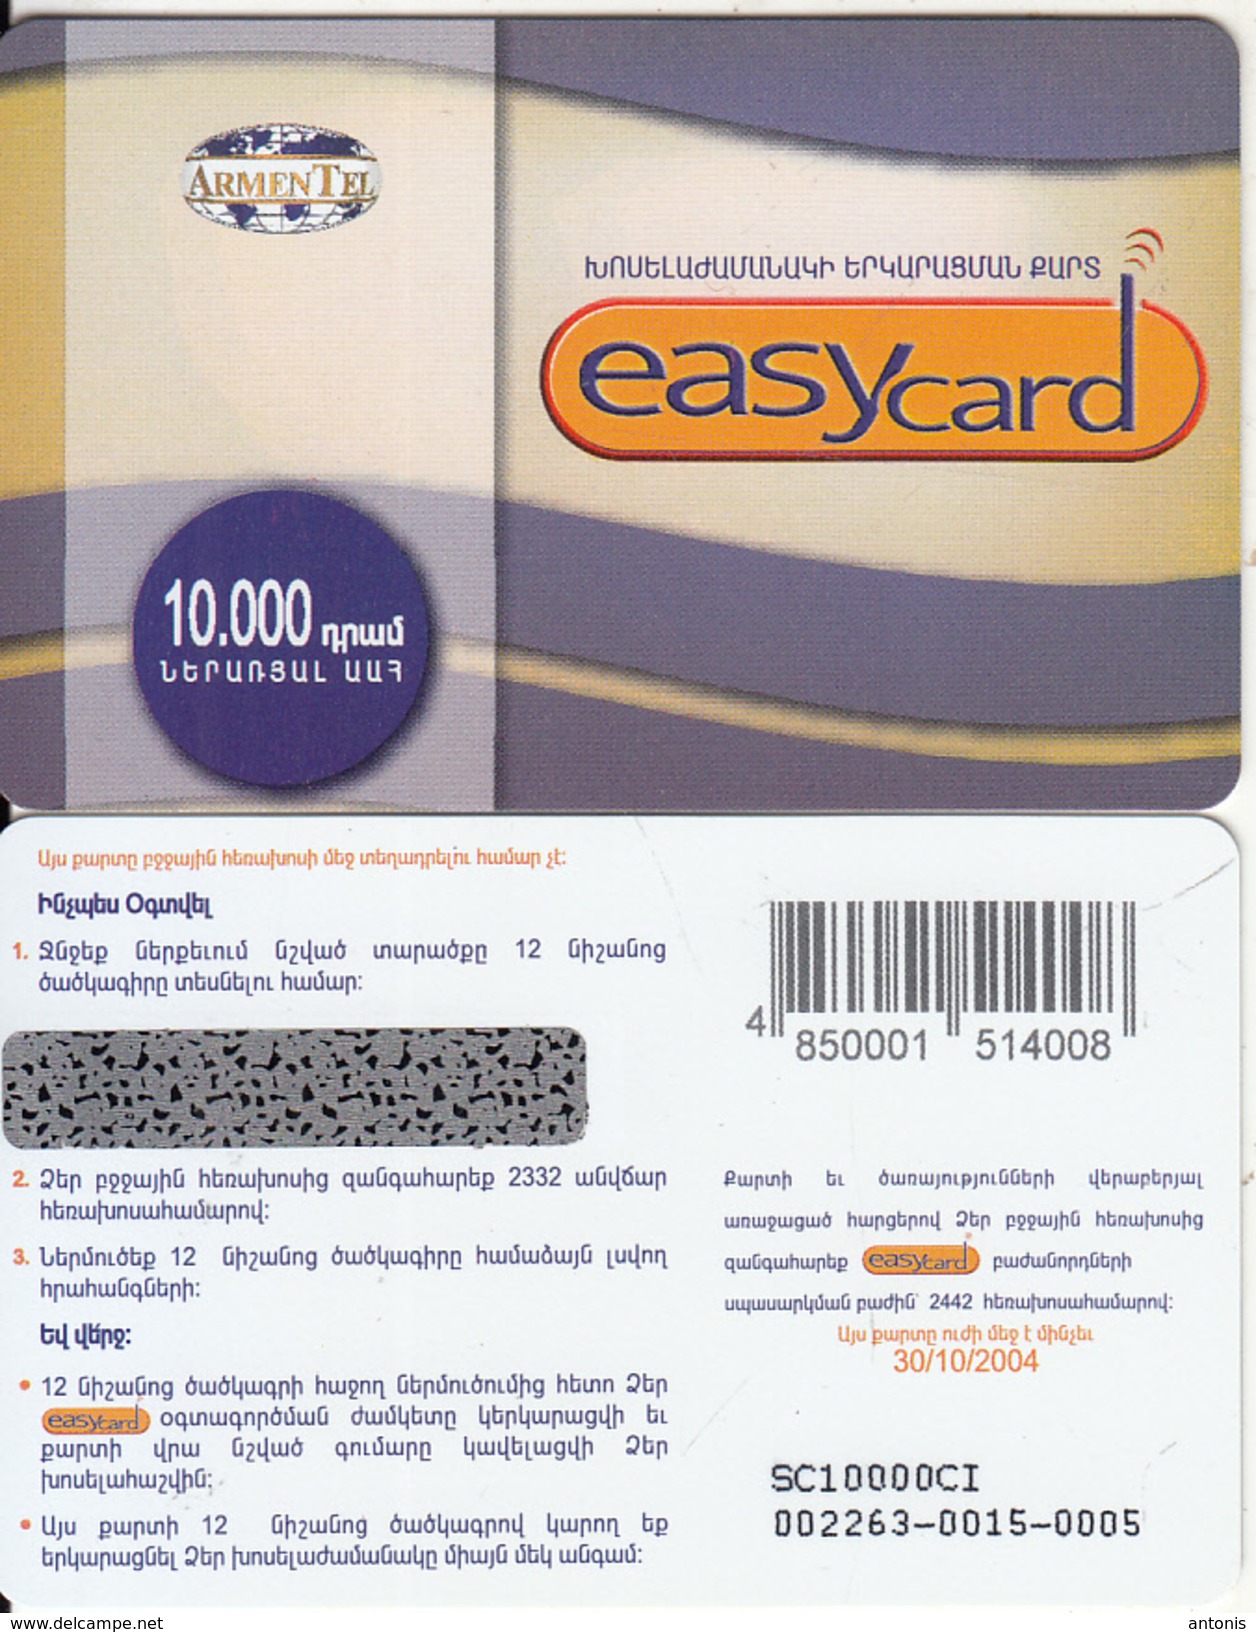 ARMENIA - ArmenTel Prepaid Card 10000 AMD, Tirage 35000, Exp.date 30/10/04, Mint - Armenia